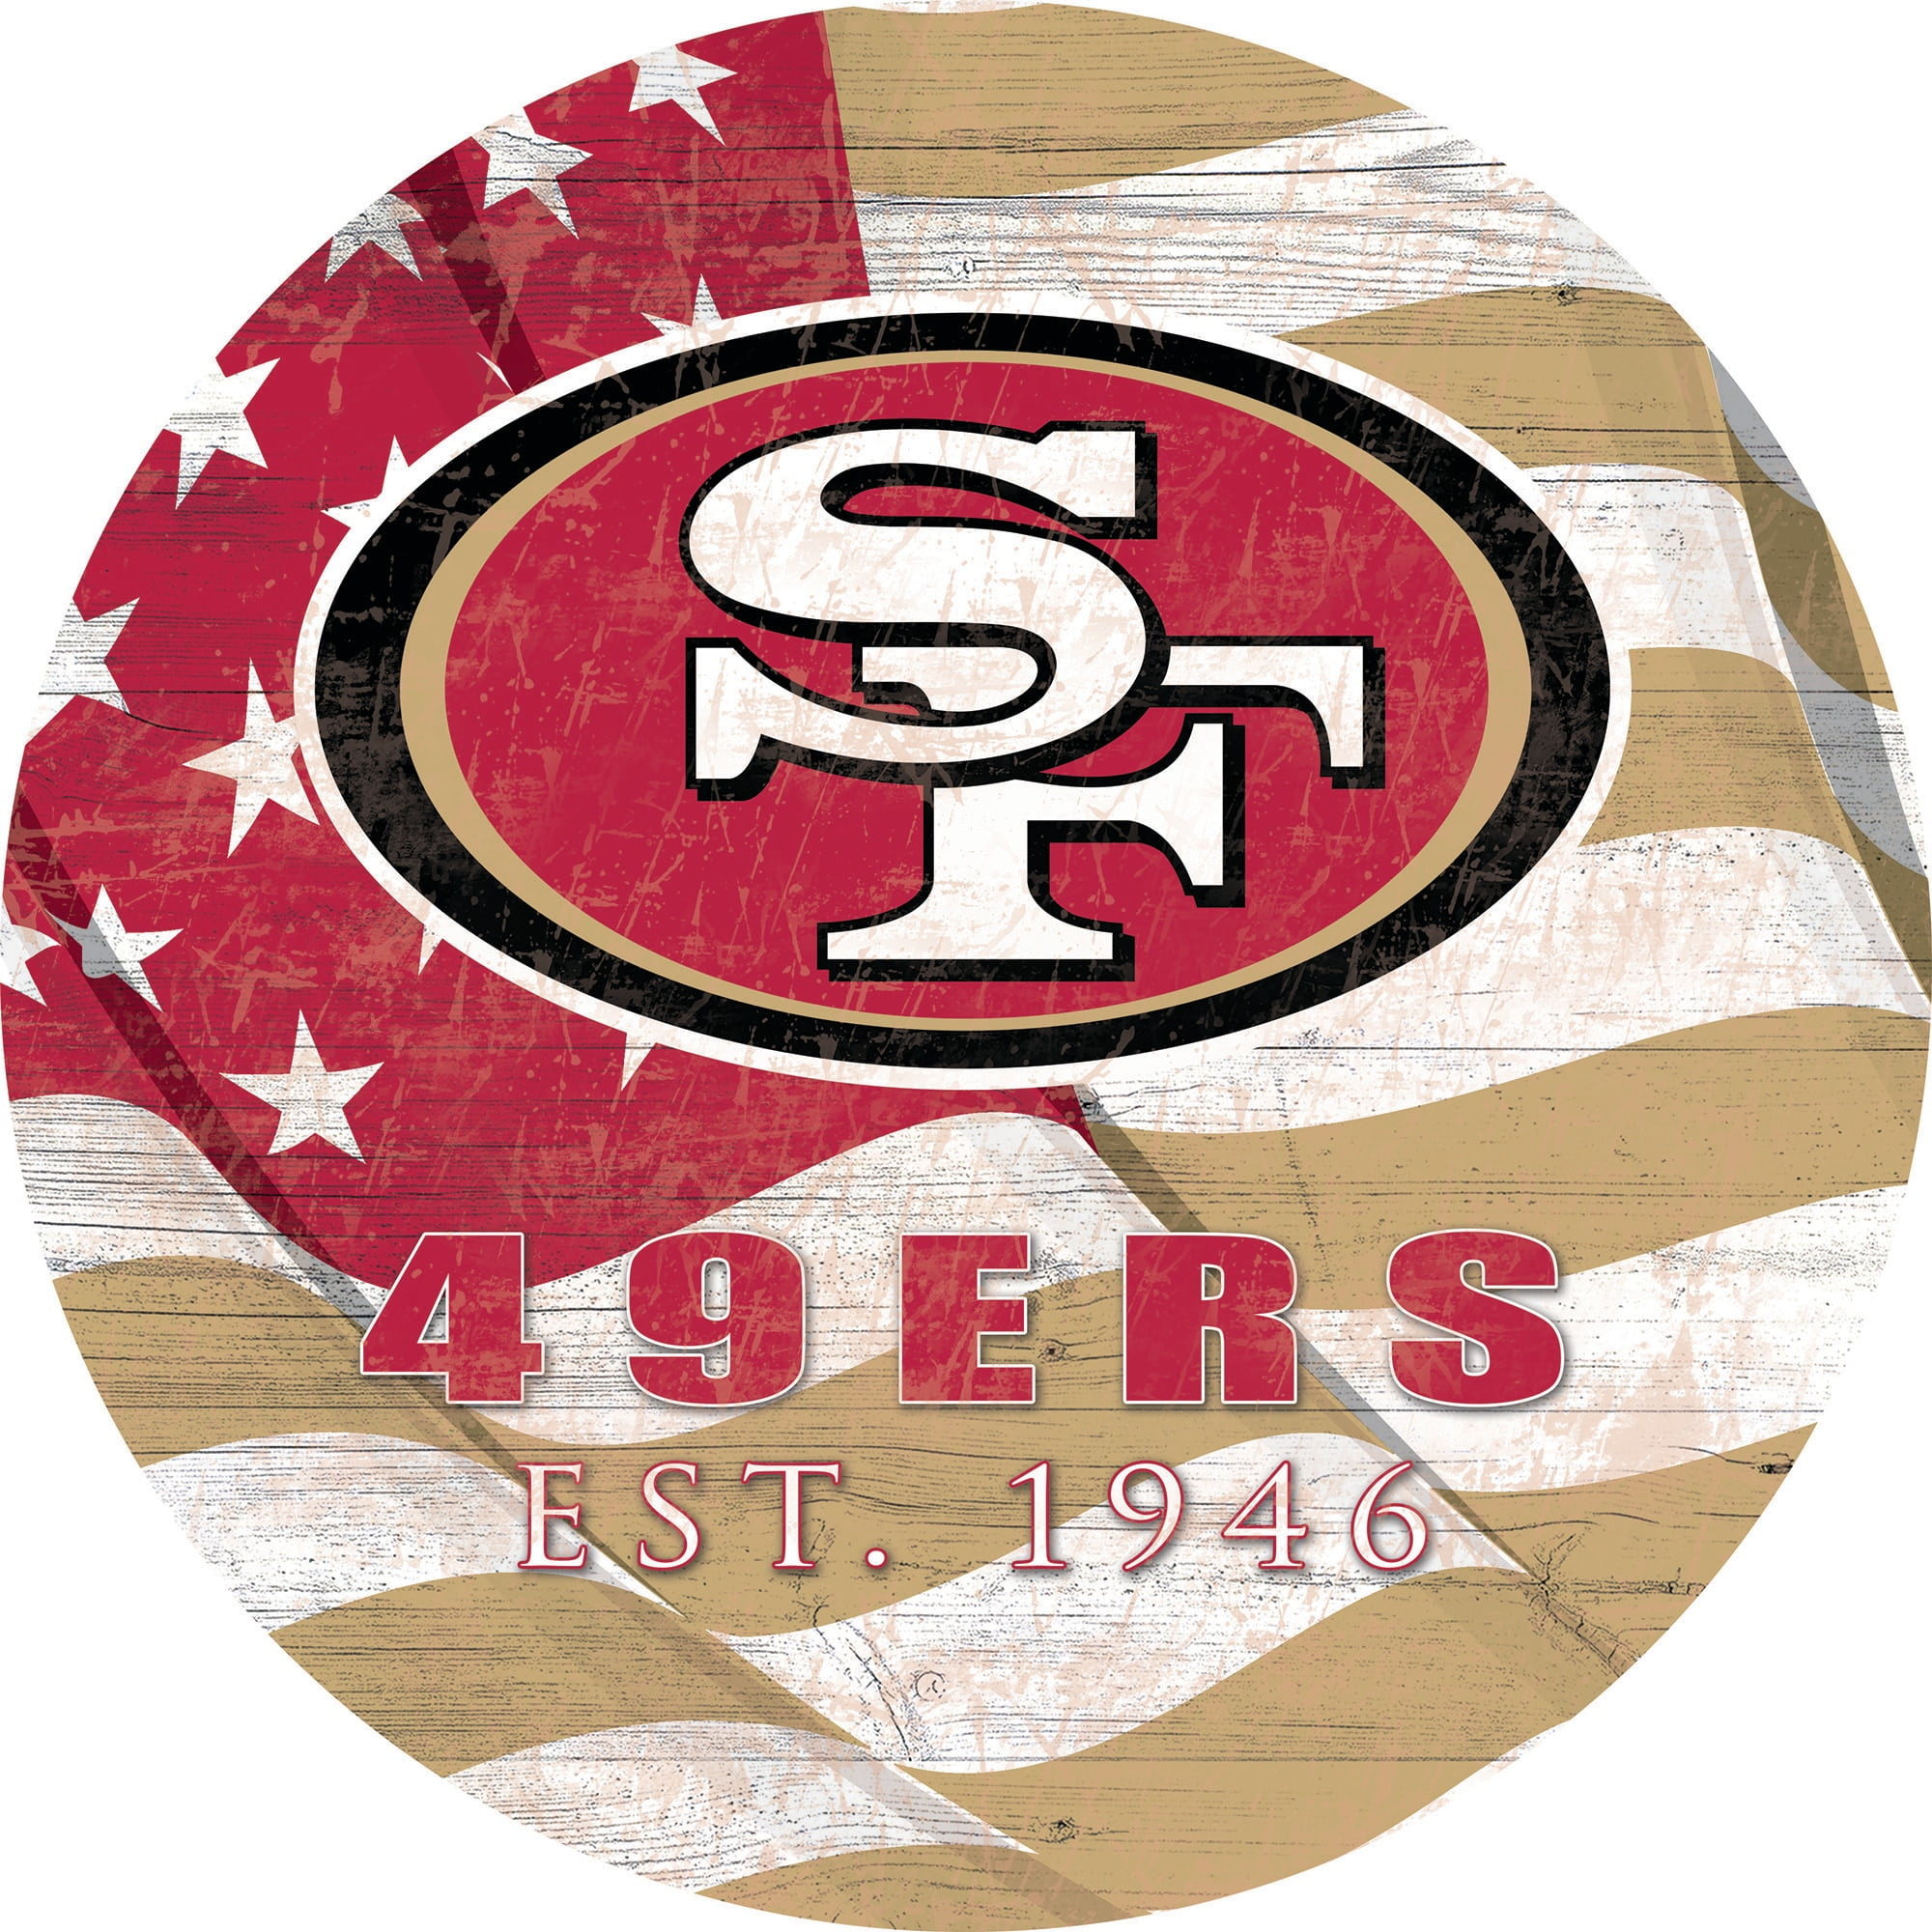 San Francisco 49ers NFL Pennant 29×12